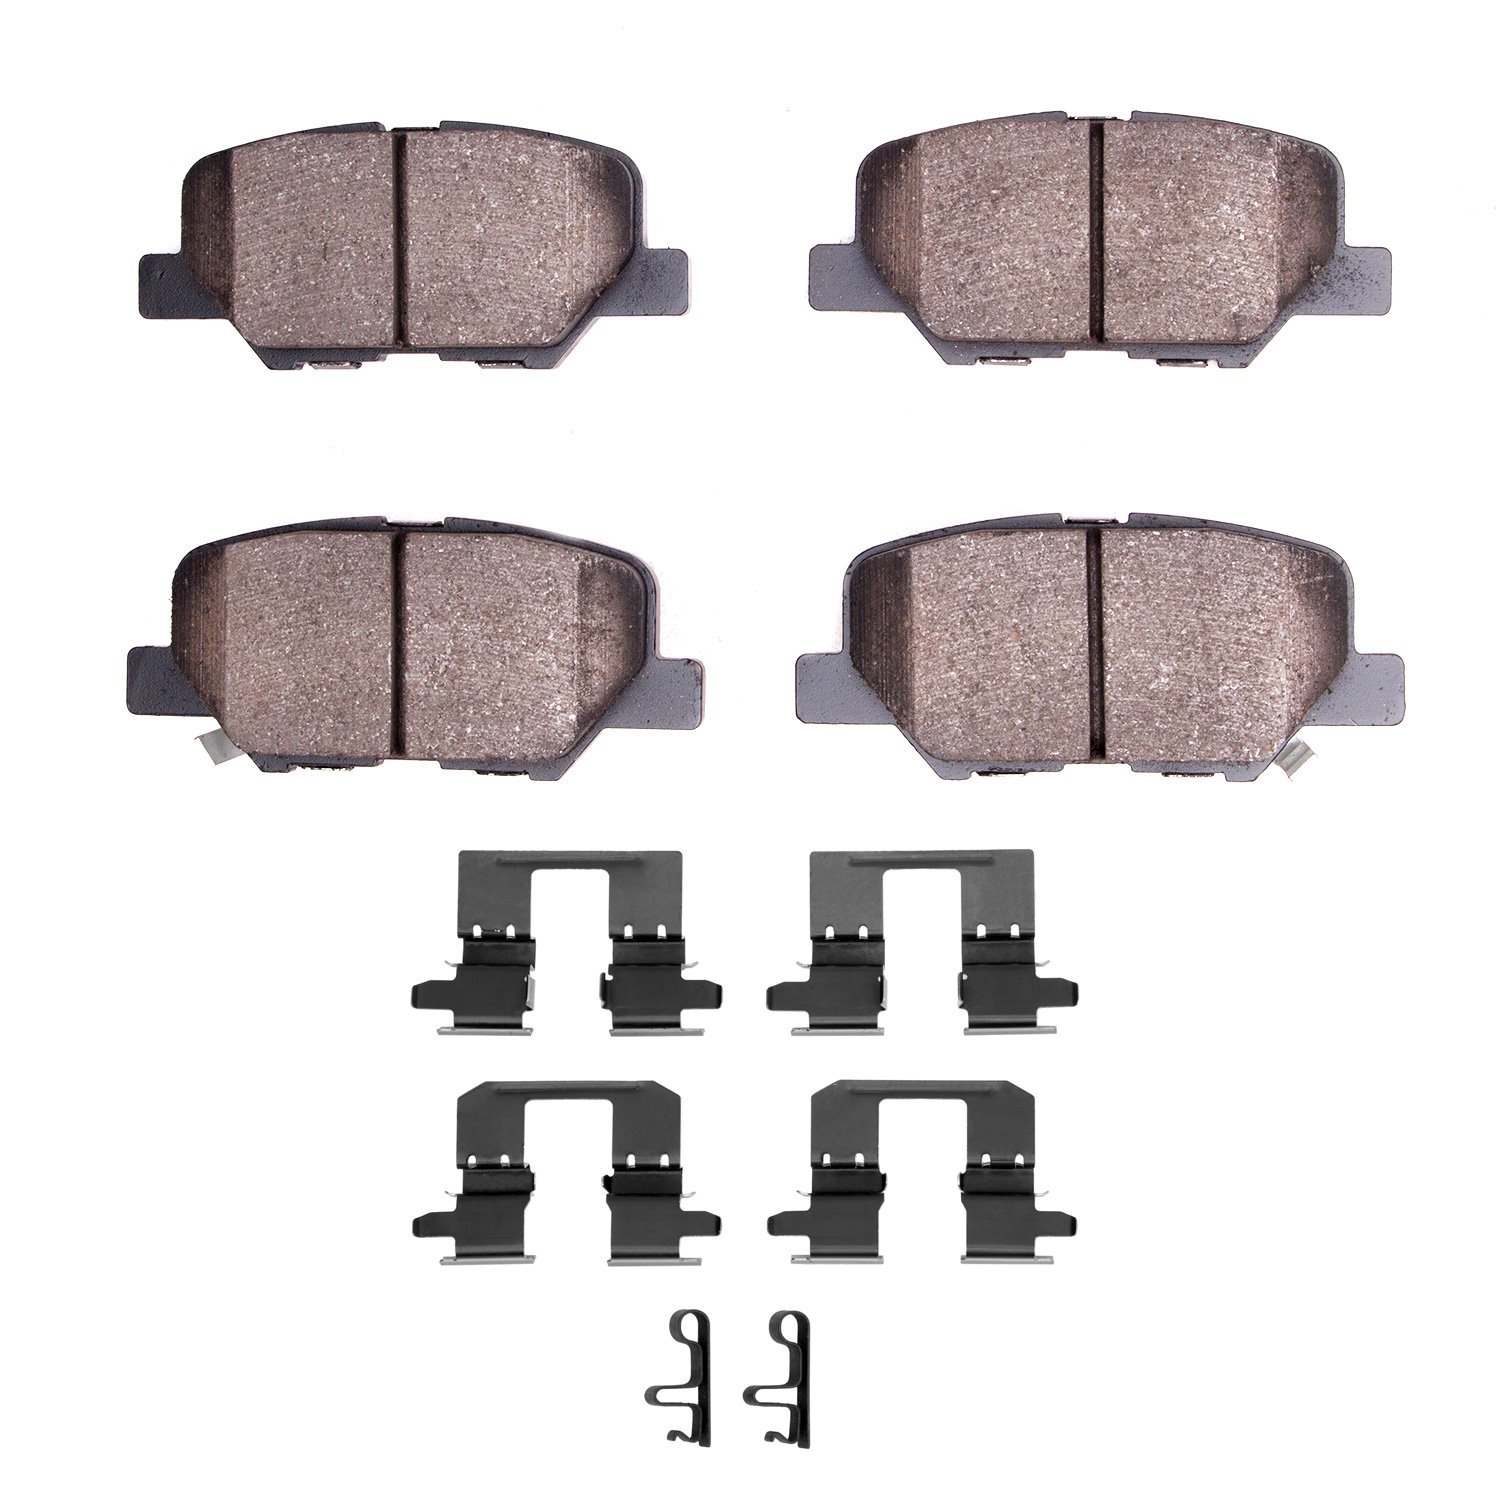 1310-1679-01 3000-Series Ceramic Brake Pads & Hardware Kit, Fits Select Multiple Makes/Models, Position: Rear